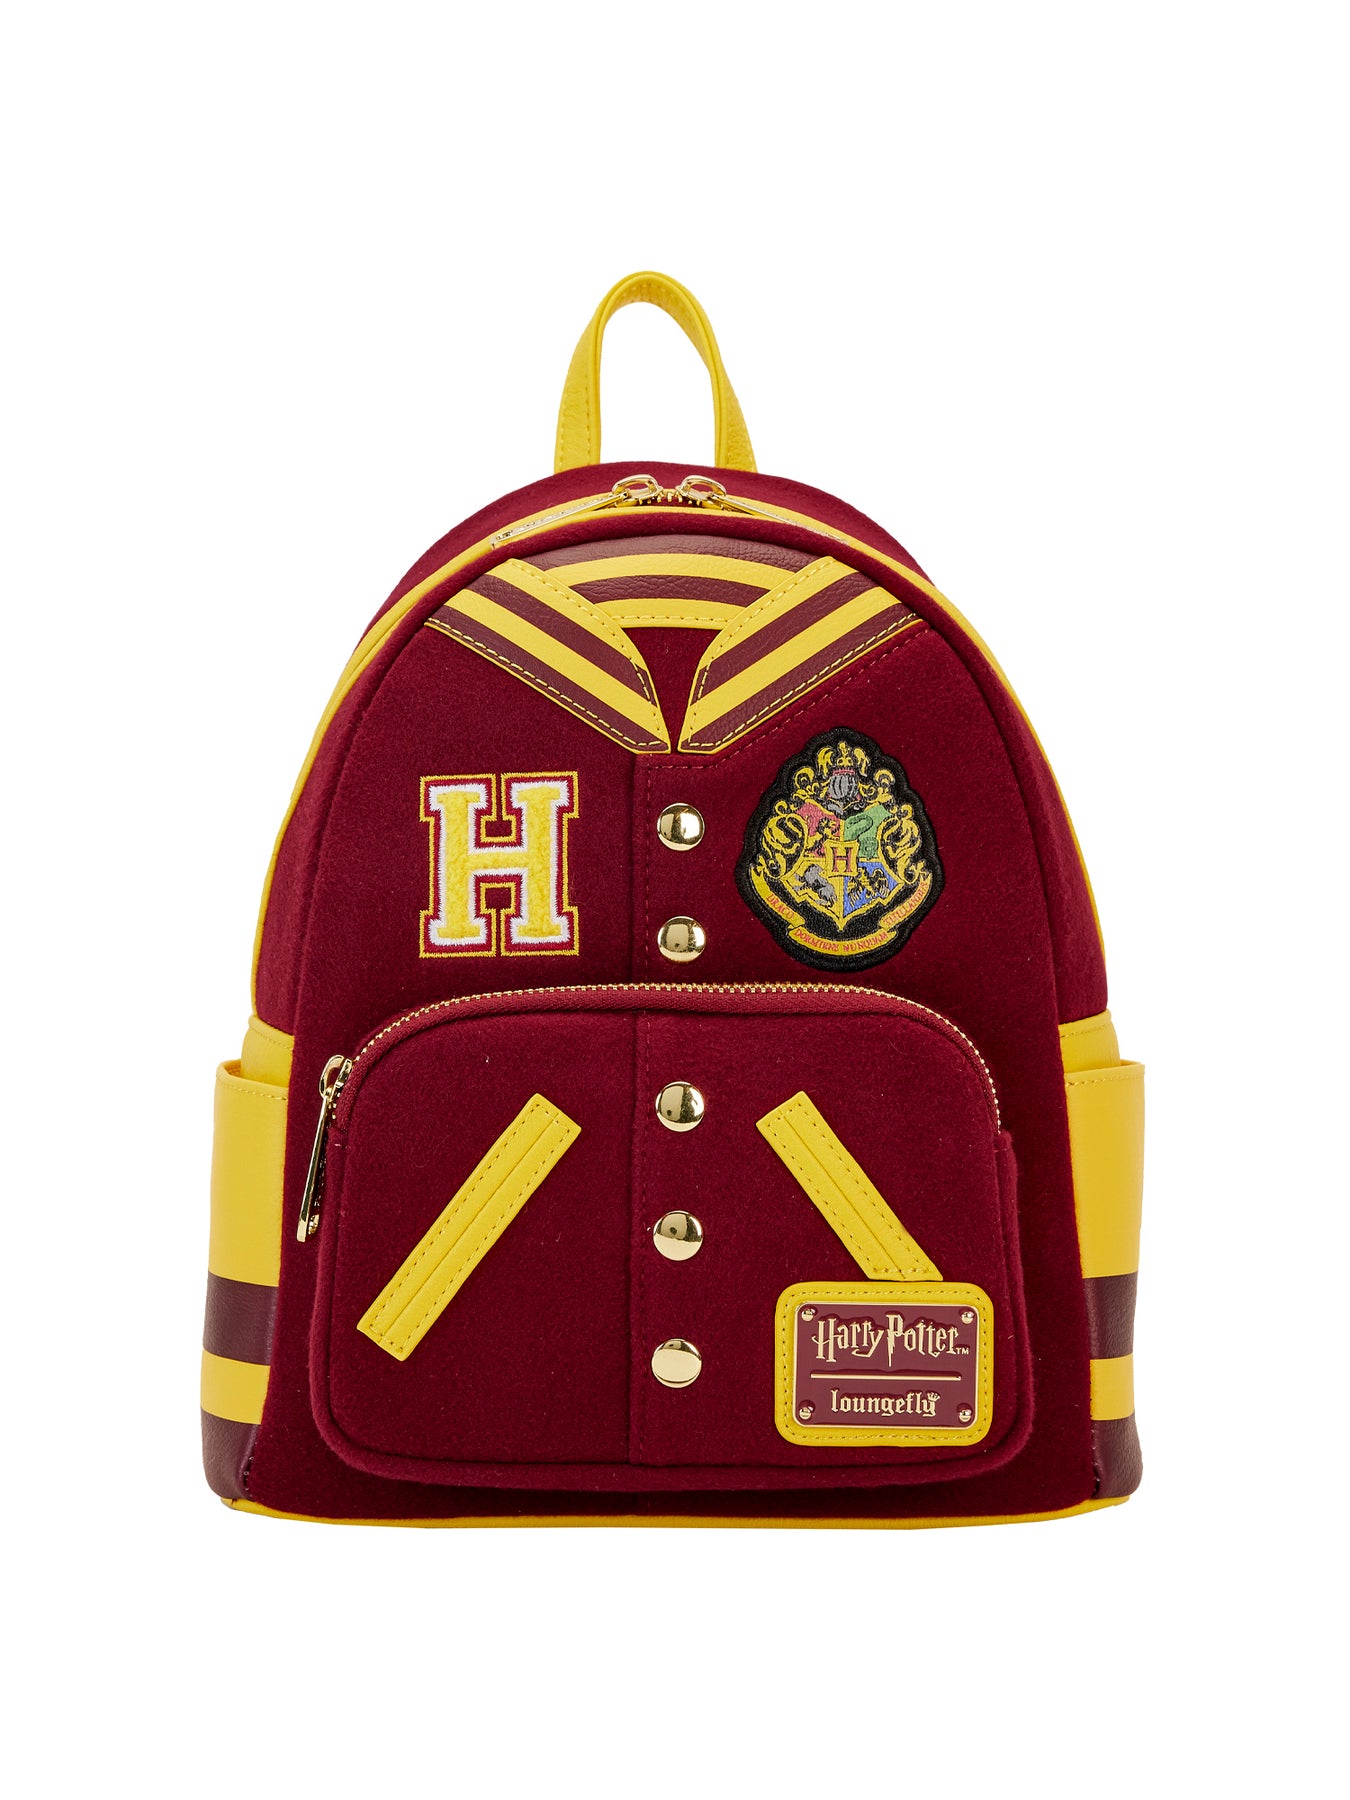 Loungefly Harry Potter Hogwarts Mandrake Mini Backpack Bookbag Removable  Pouch